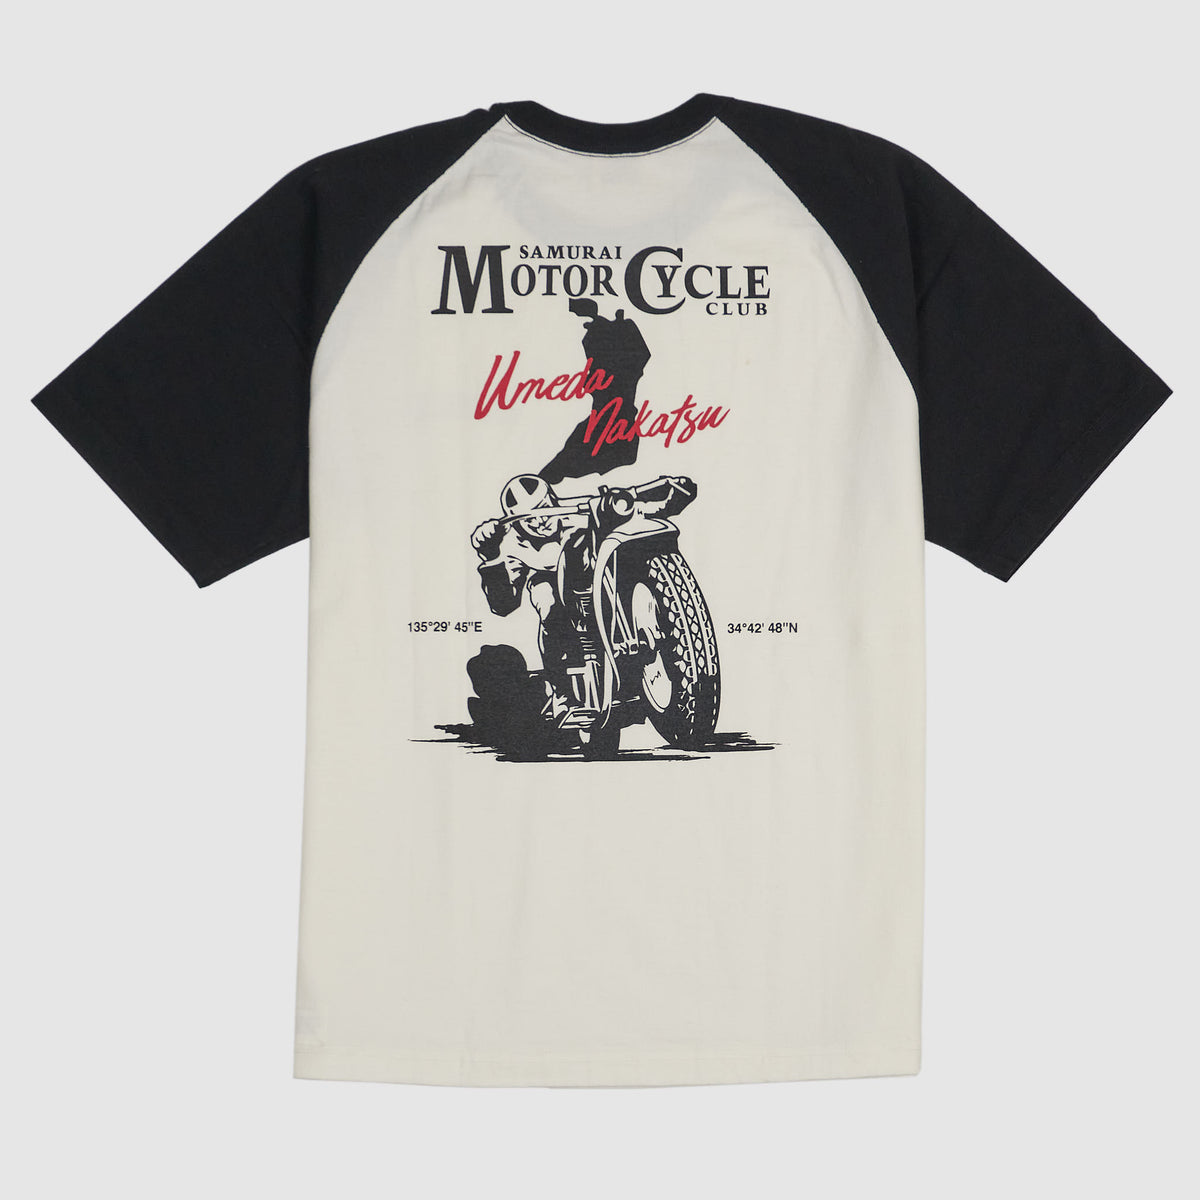 Samurai Jeans Crew Neck Raglan Motorcycle Club T-Shirt